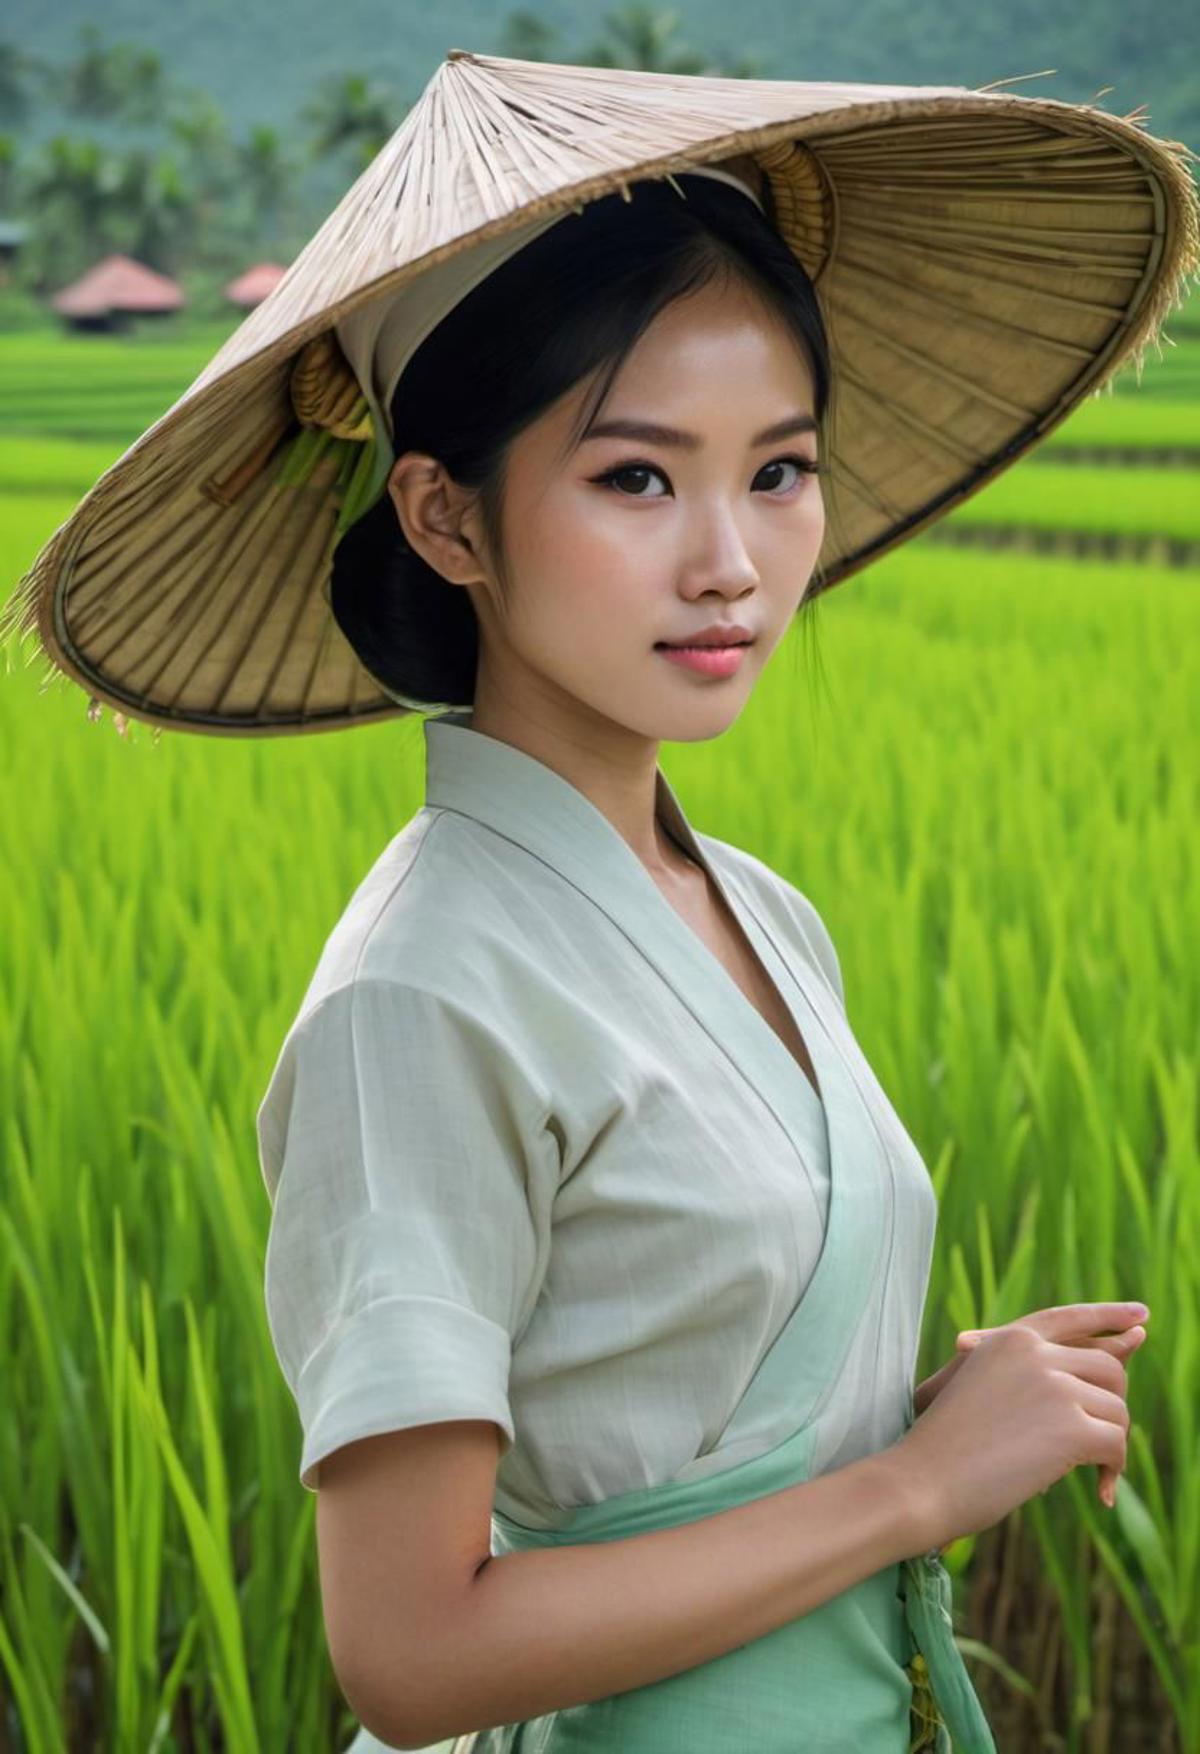 Vietnamese traditional dress - Ao dai image by hpblastone515